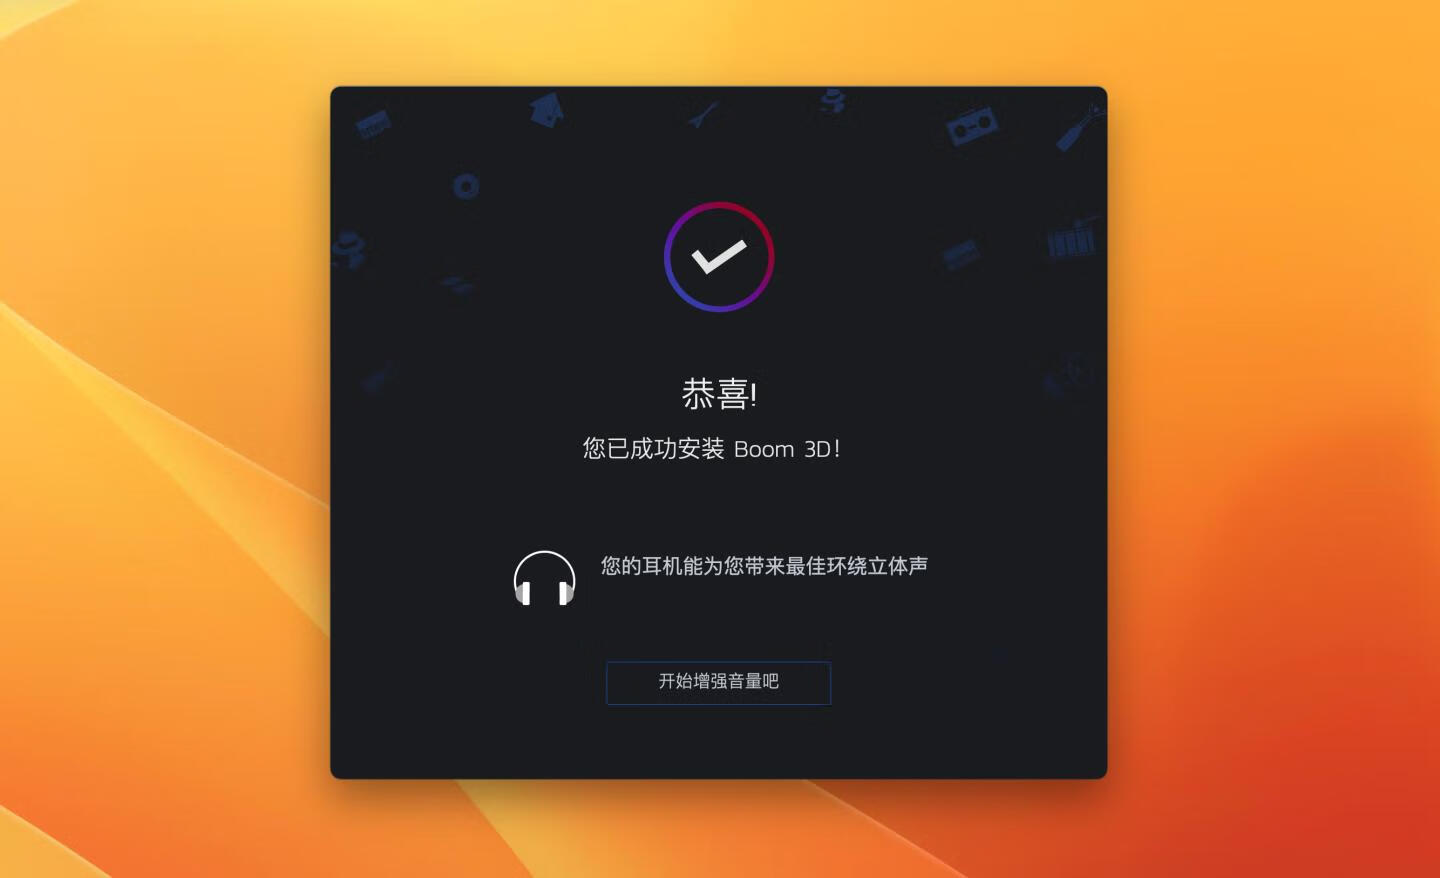 Boom 3D for Mac v2.0.2 中文版- 超赞的3D环绕音效增强及播放工具